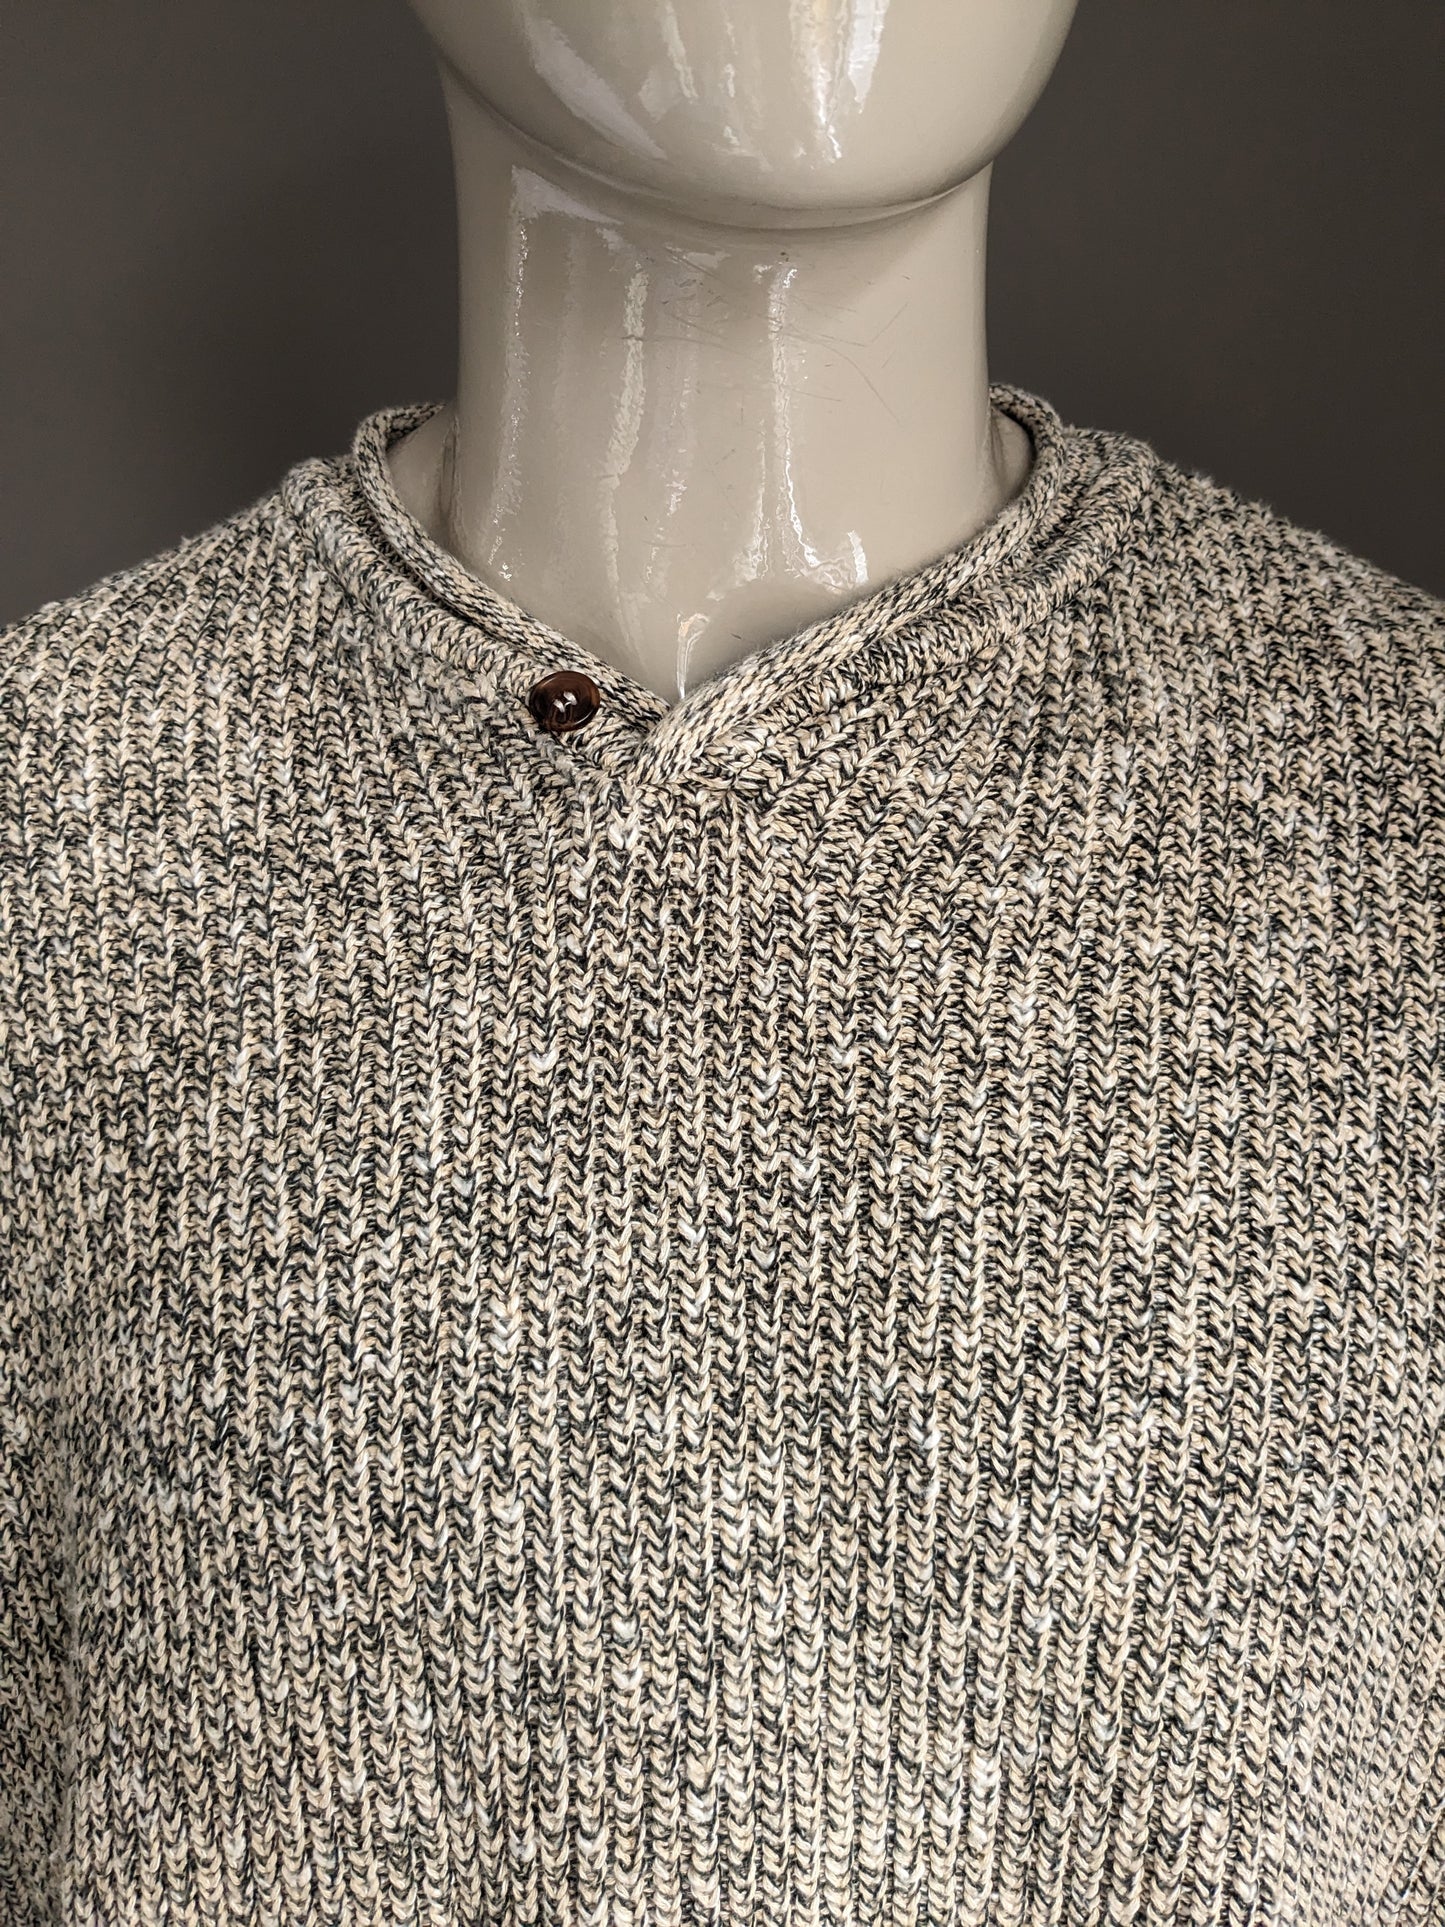 Mannes Mode -Vintage -Pullover. Grau Beige gemischt. Größe L / XL Vintage Übergroßes Modell.